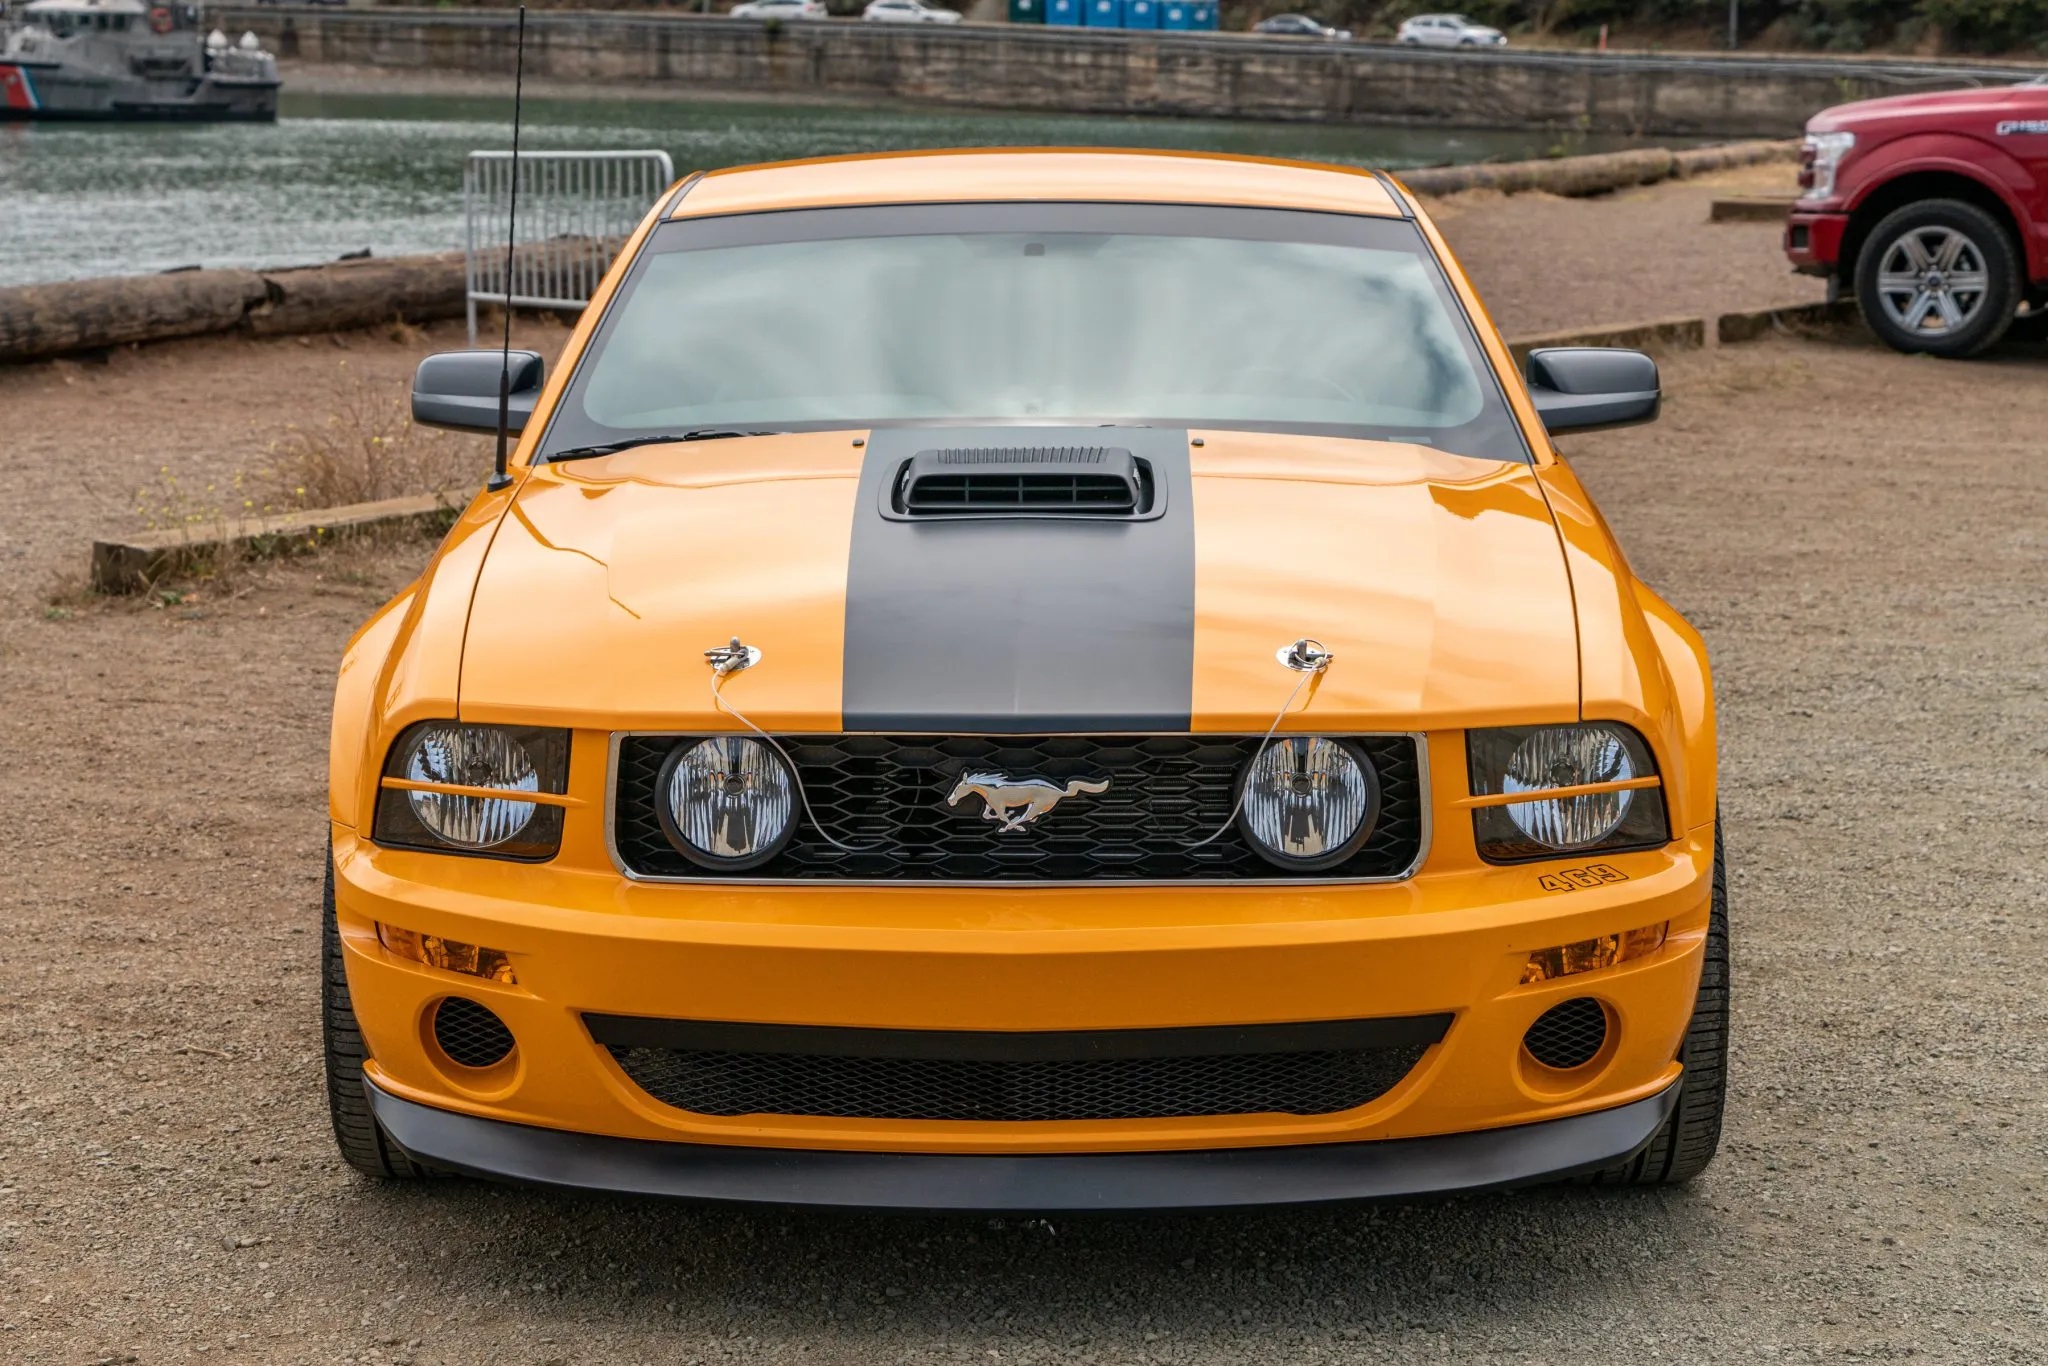 2007 Ford Mustang Saleen Parnelli Jones Edition